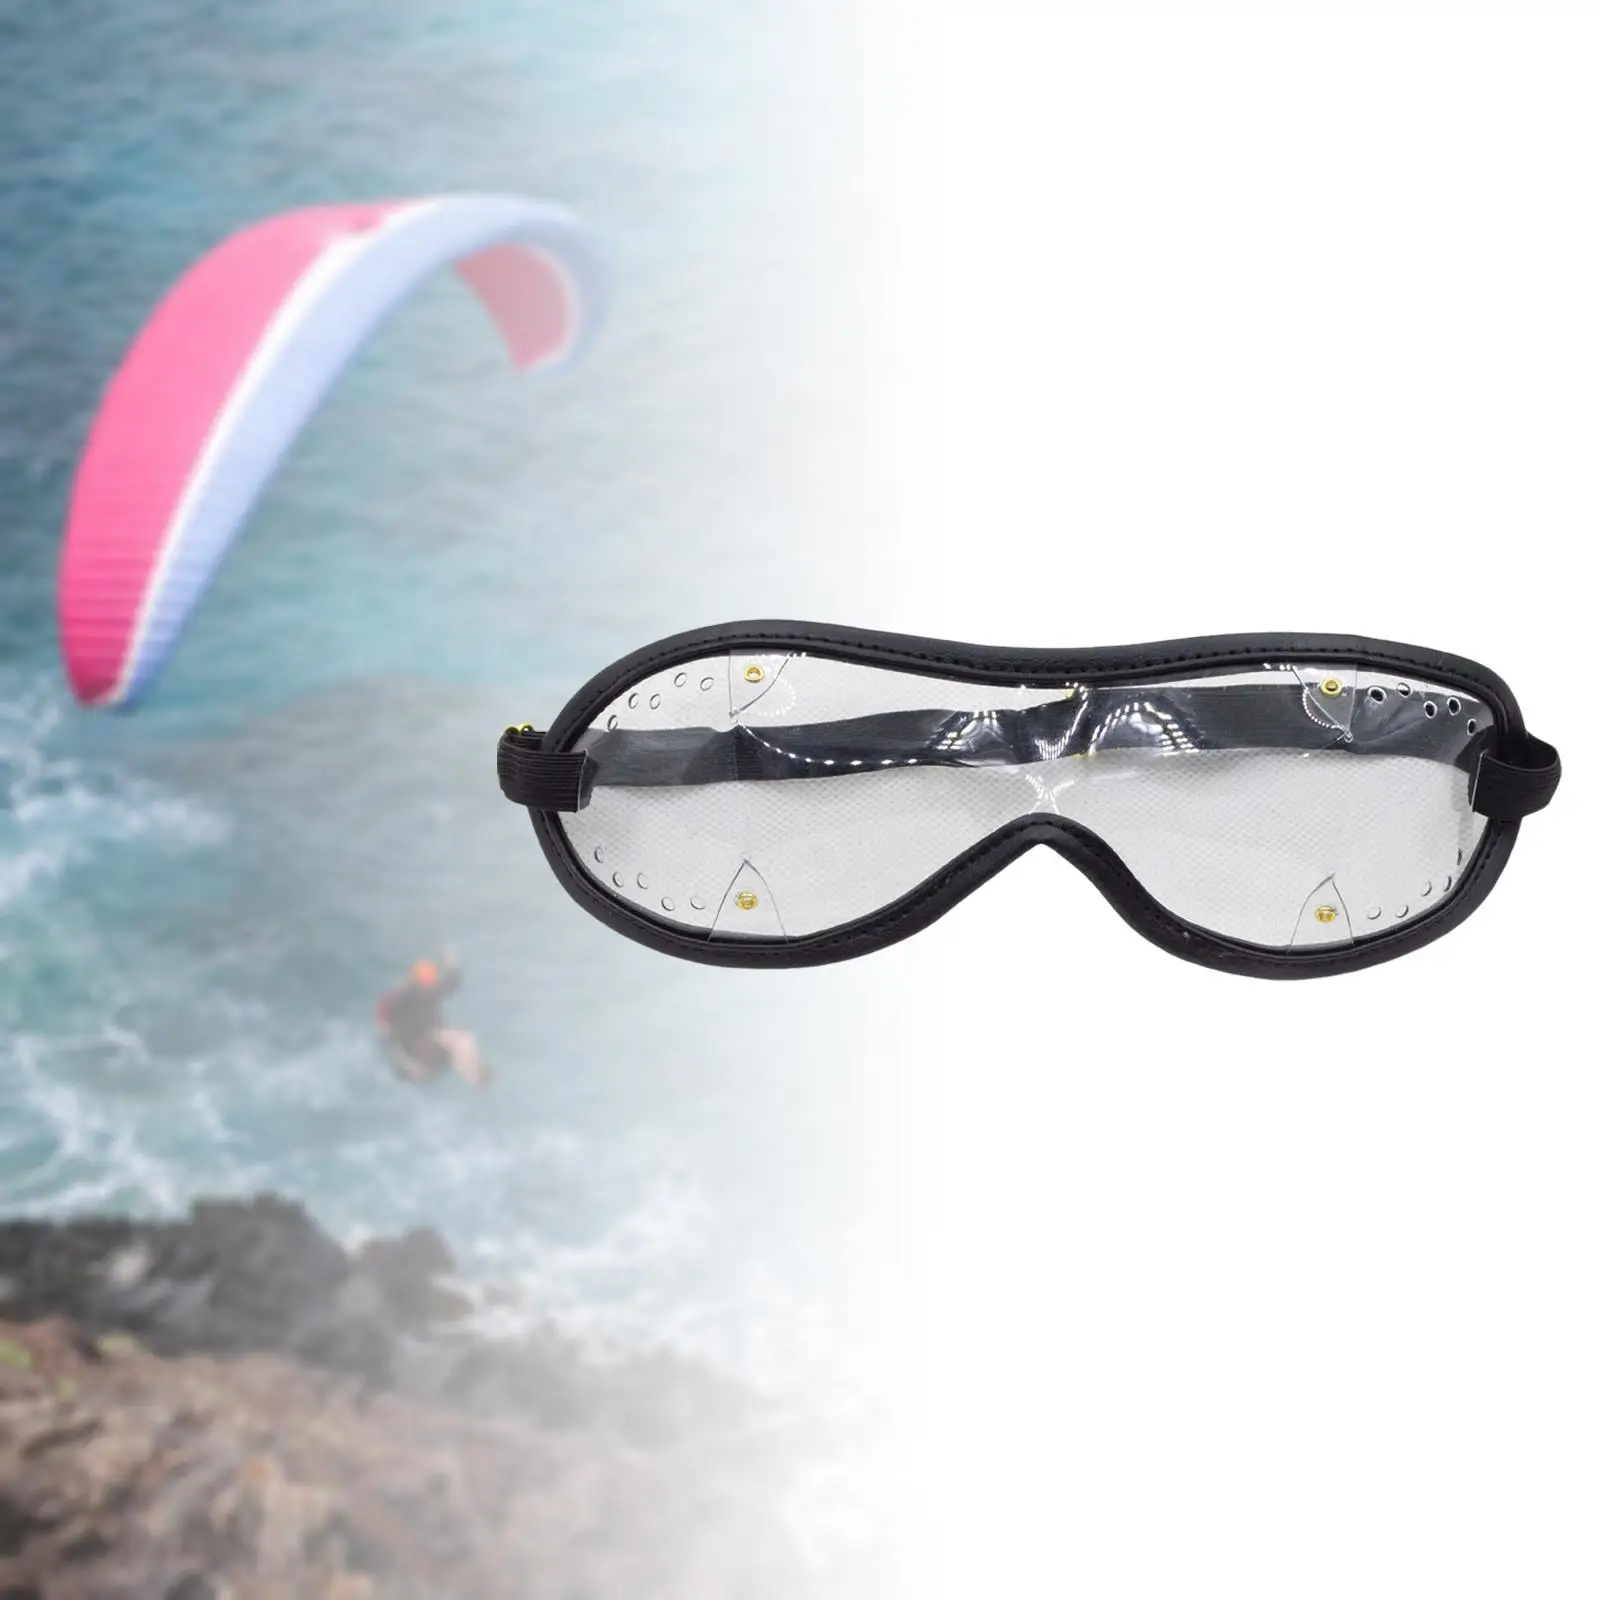 Outdoor Glasses Adjustable Strap Eye Protection Windproof Dustproof Goggles